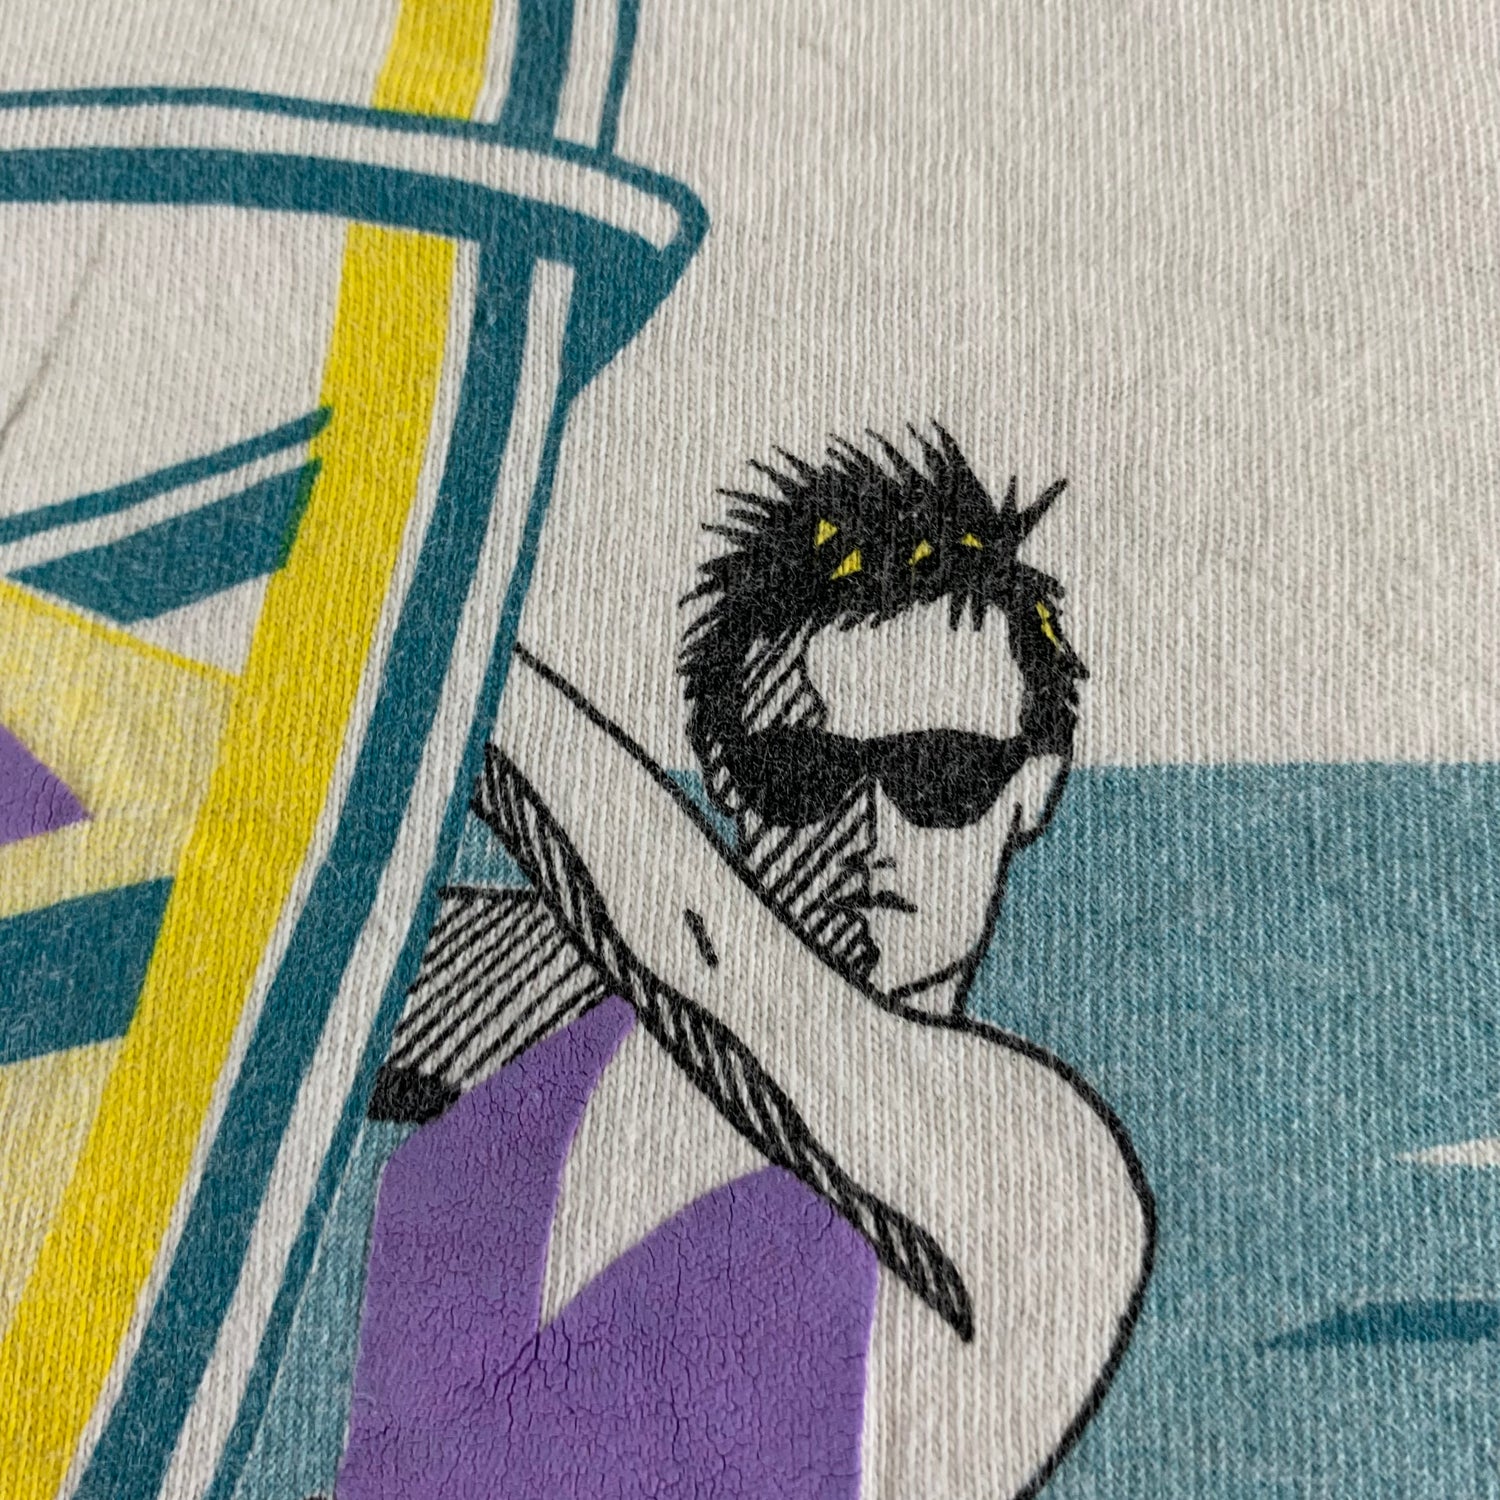 Vintage 1987 Wind Surf T-shirt size XL